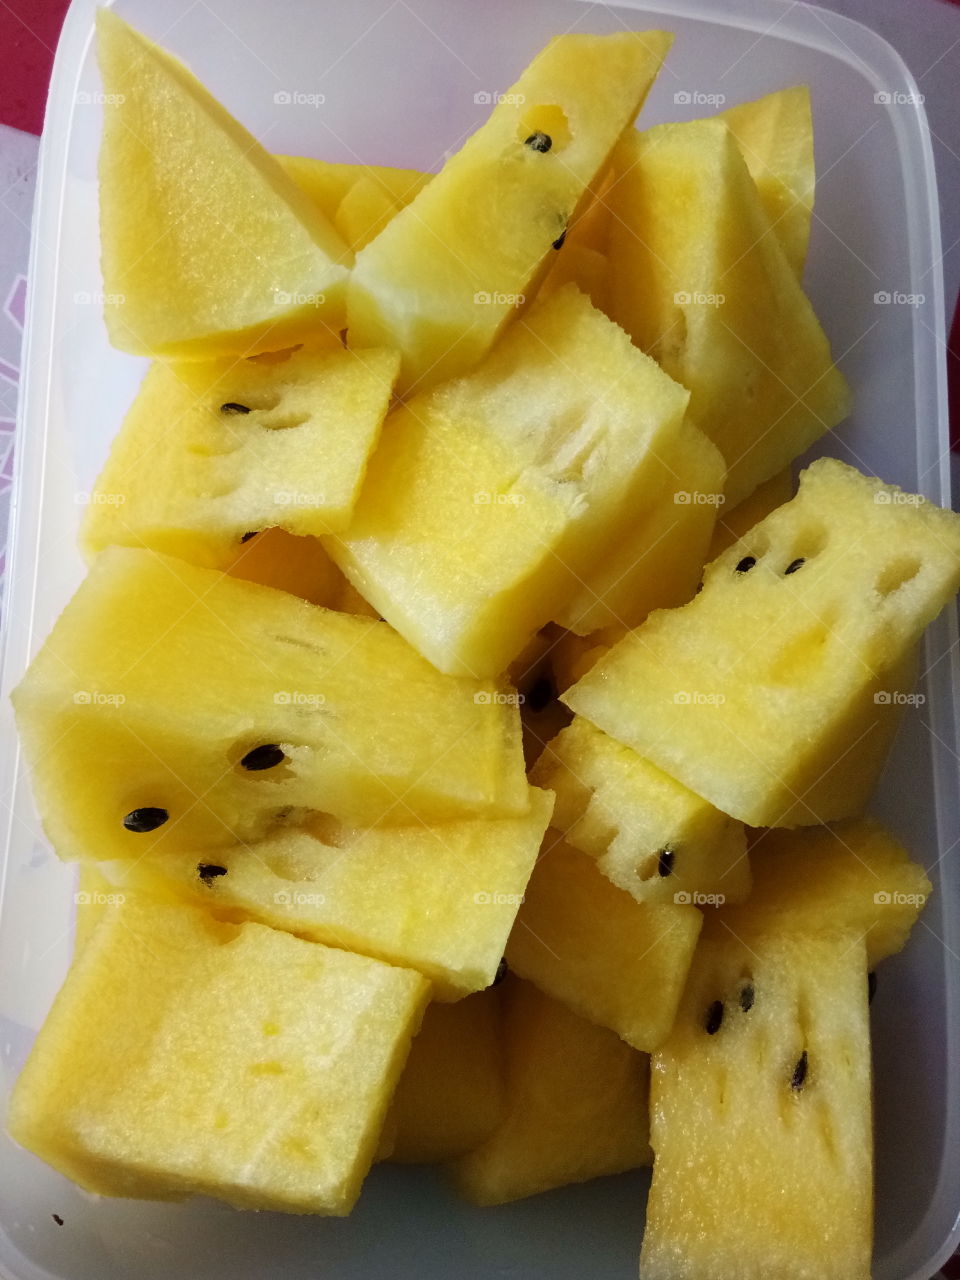 yellow water melon
fruit
thailand